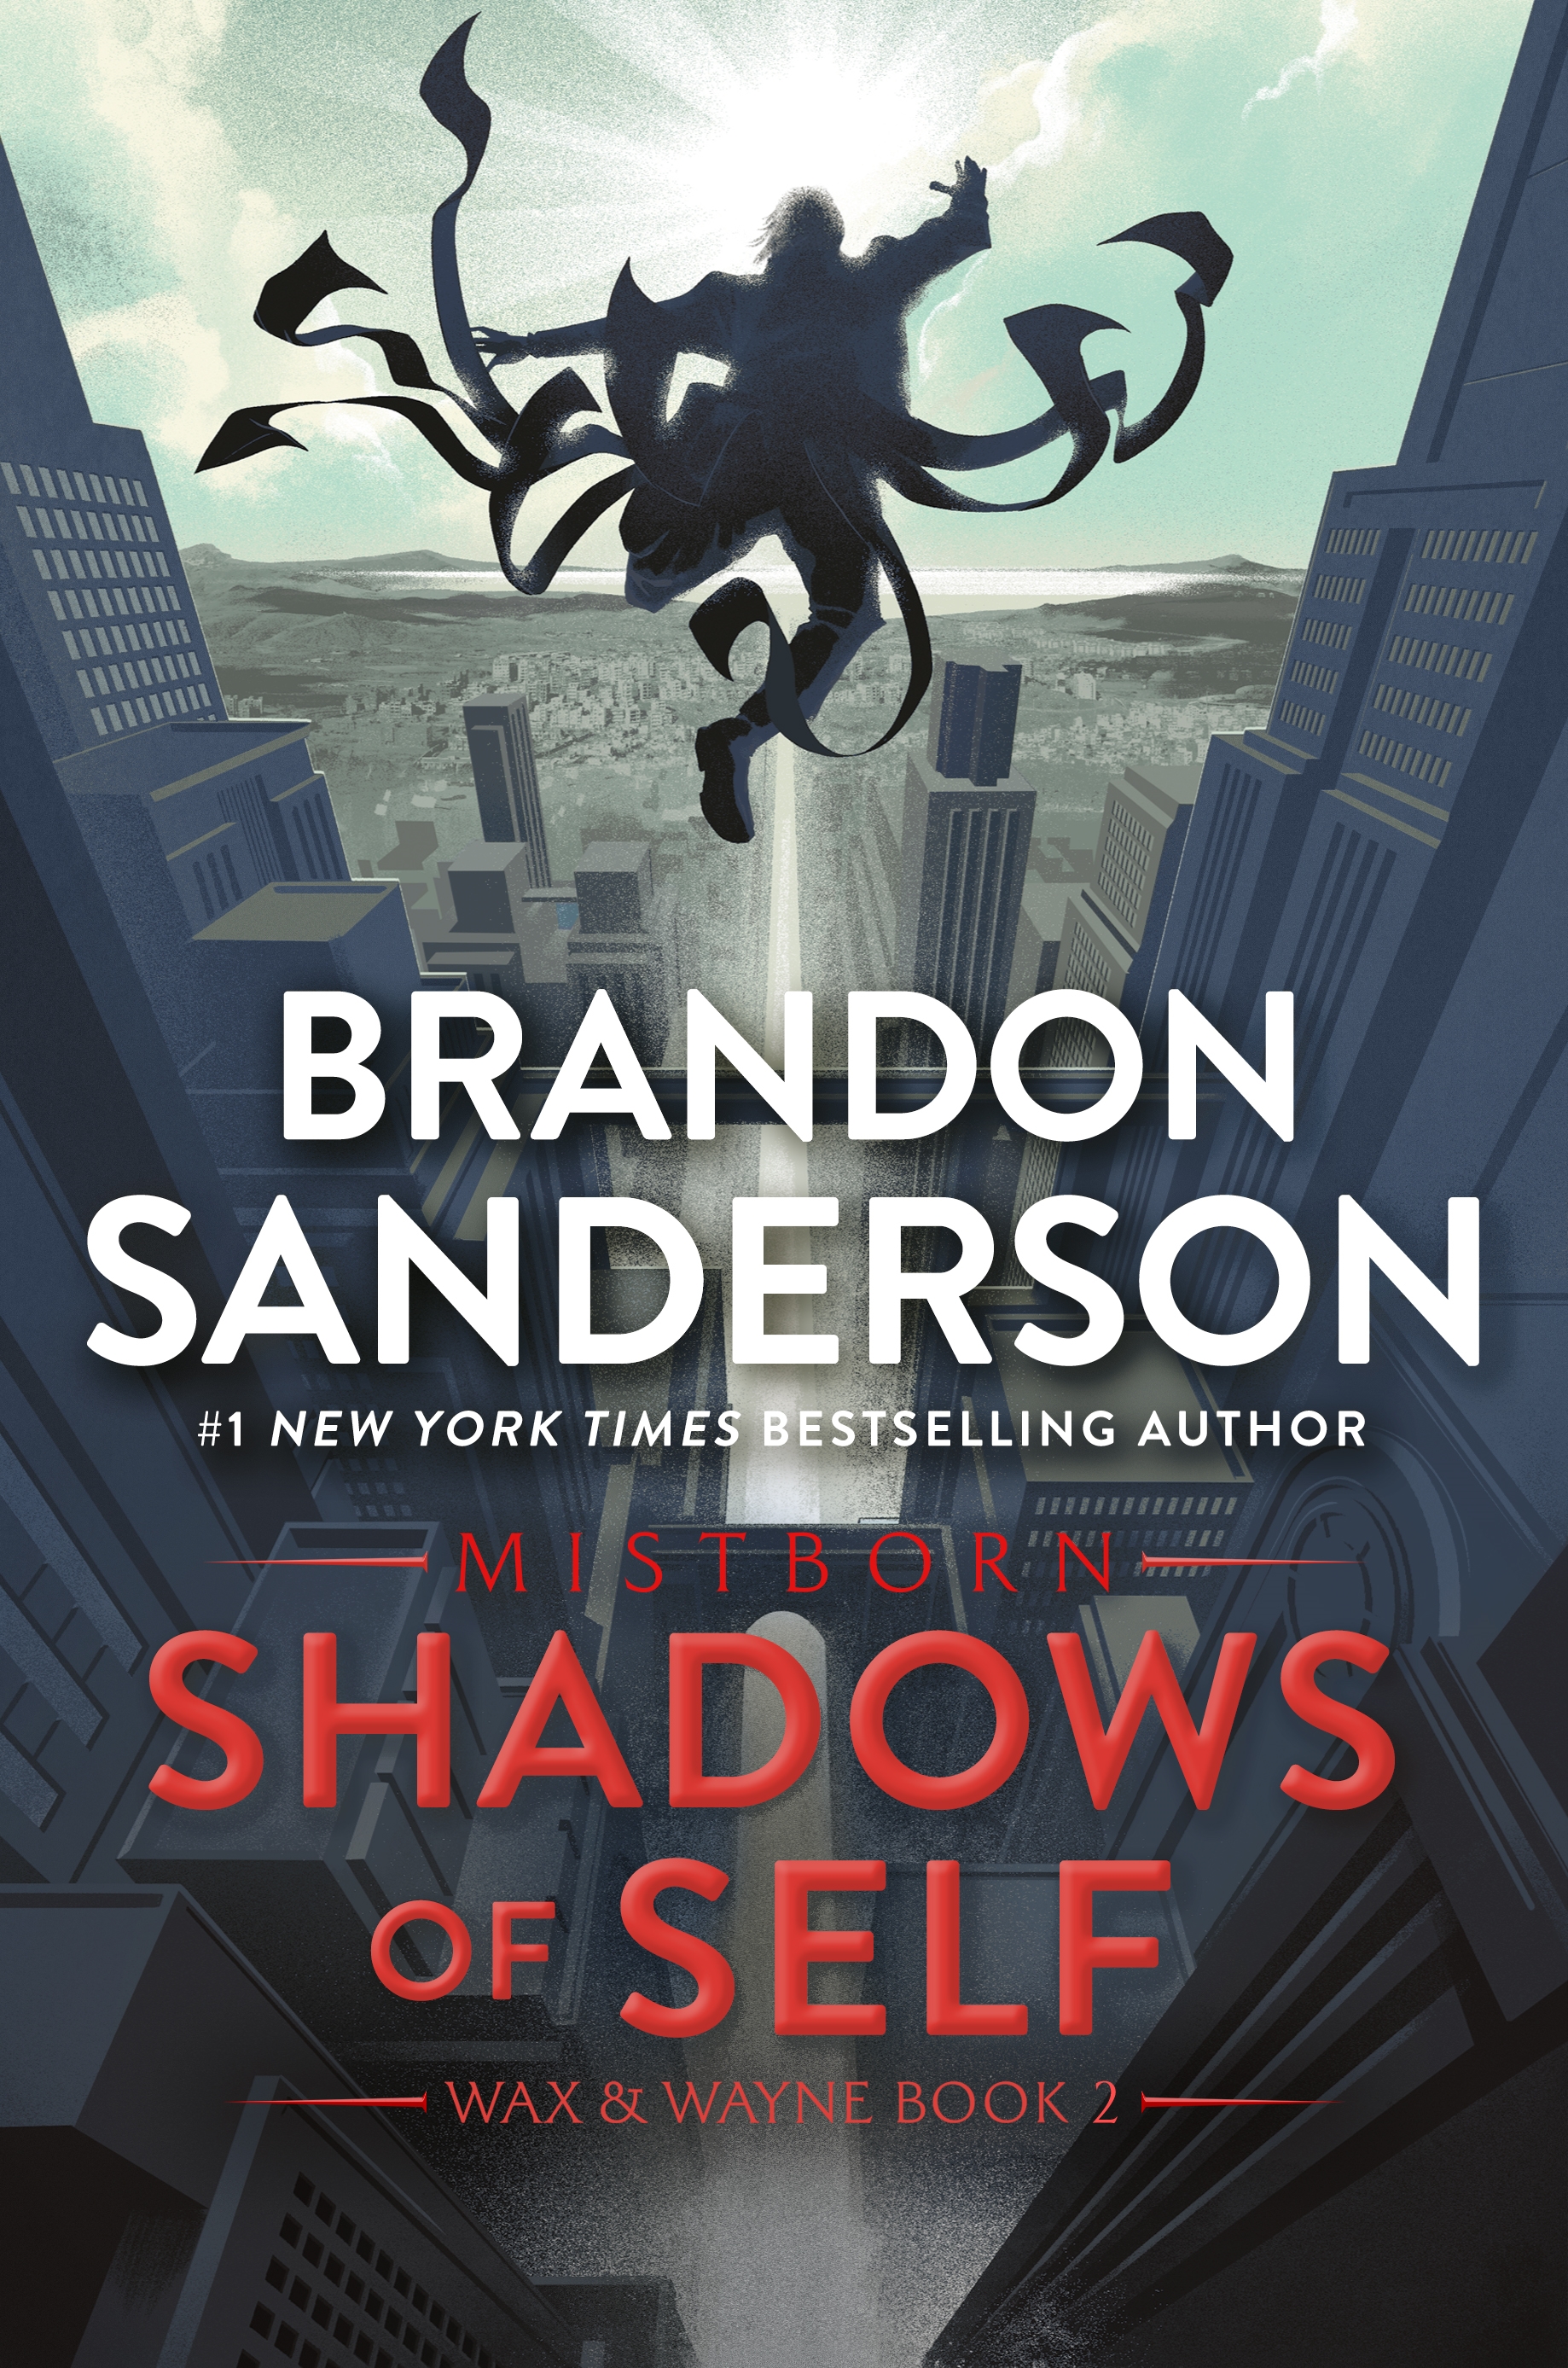 Shadows of Self : A Mistborn Novel by Brandon Sanderson